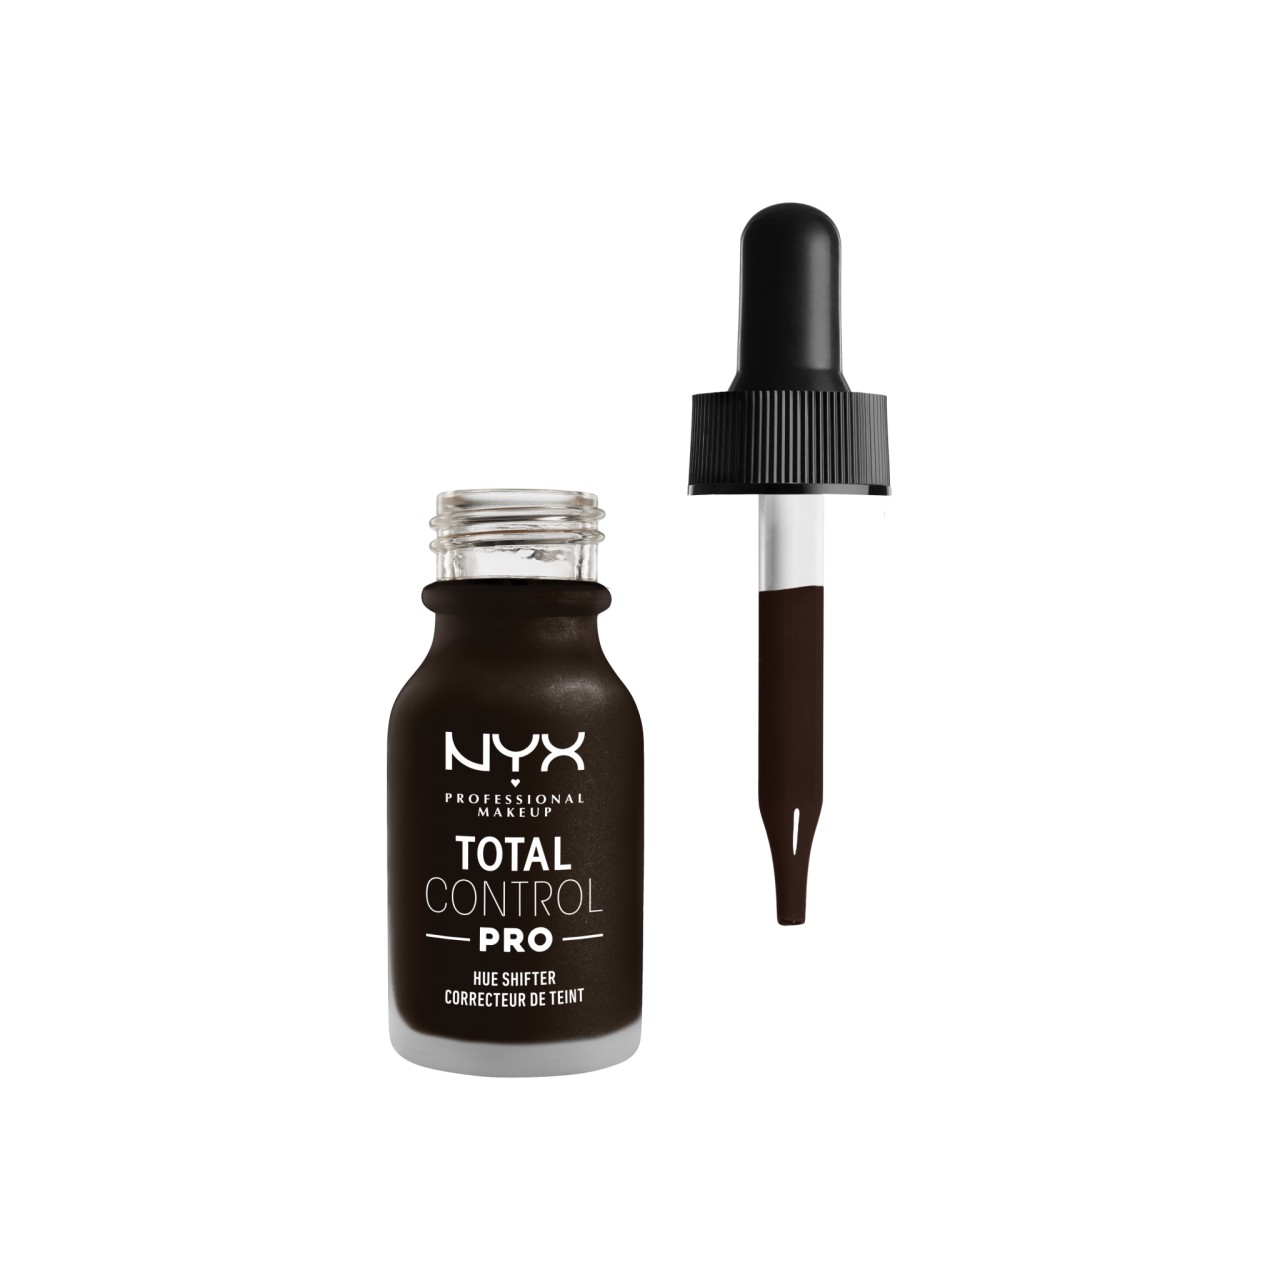 NYX Professional Makeup Pro Hue Shifter